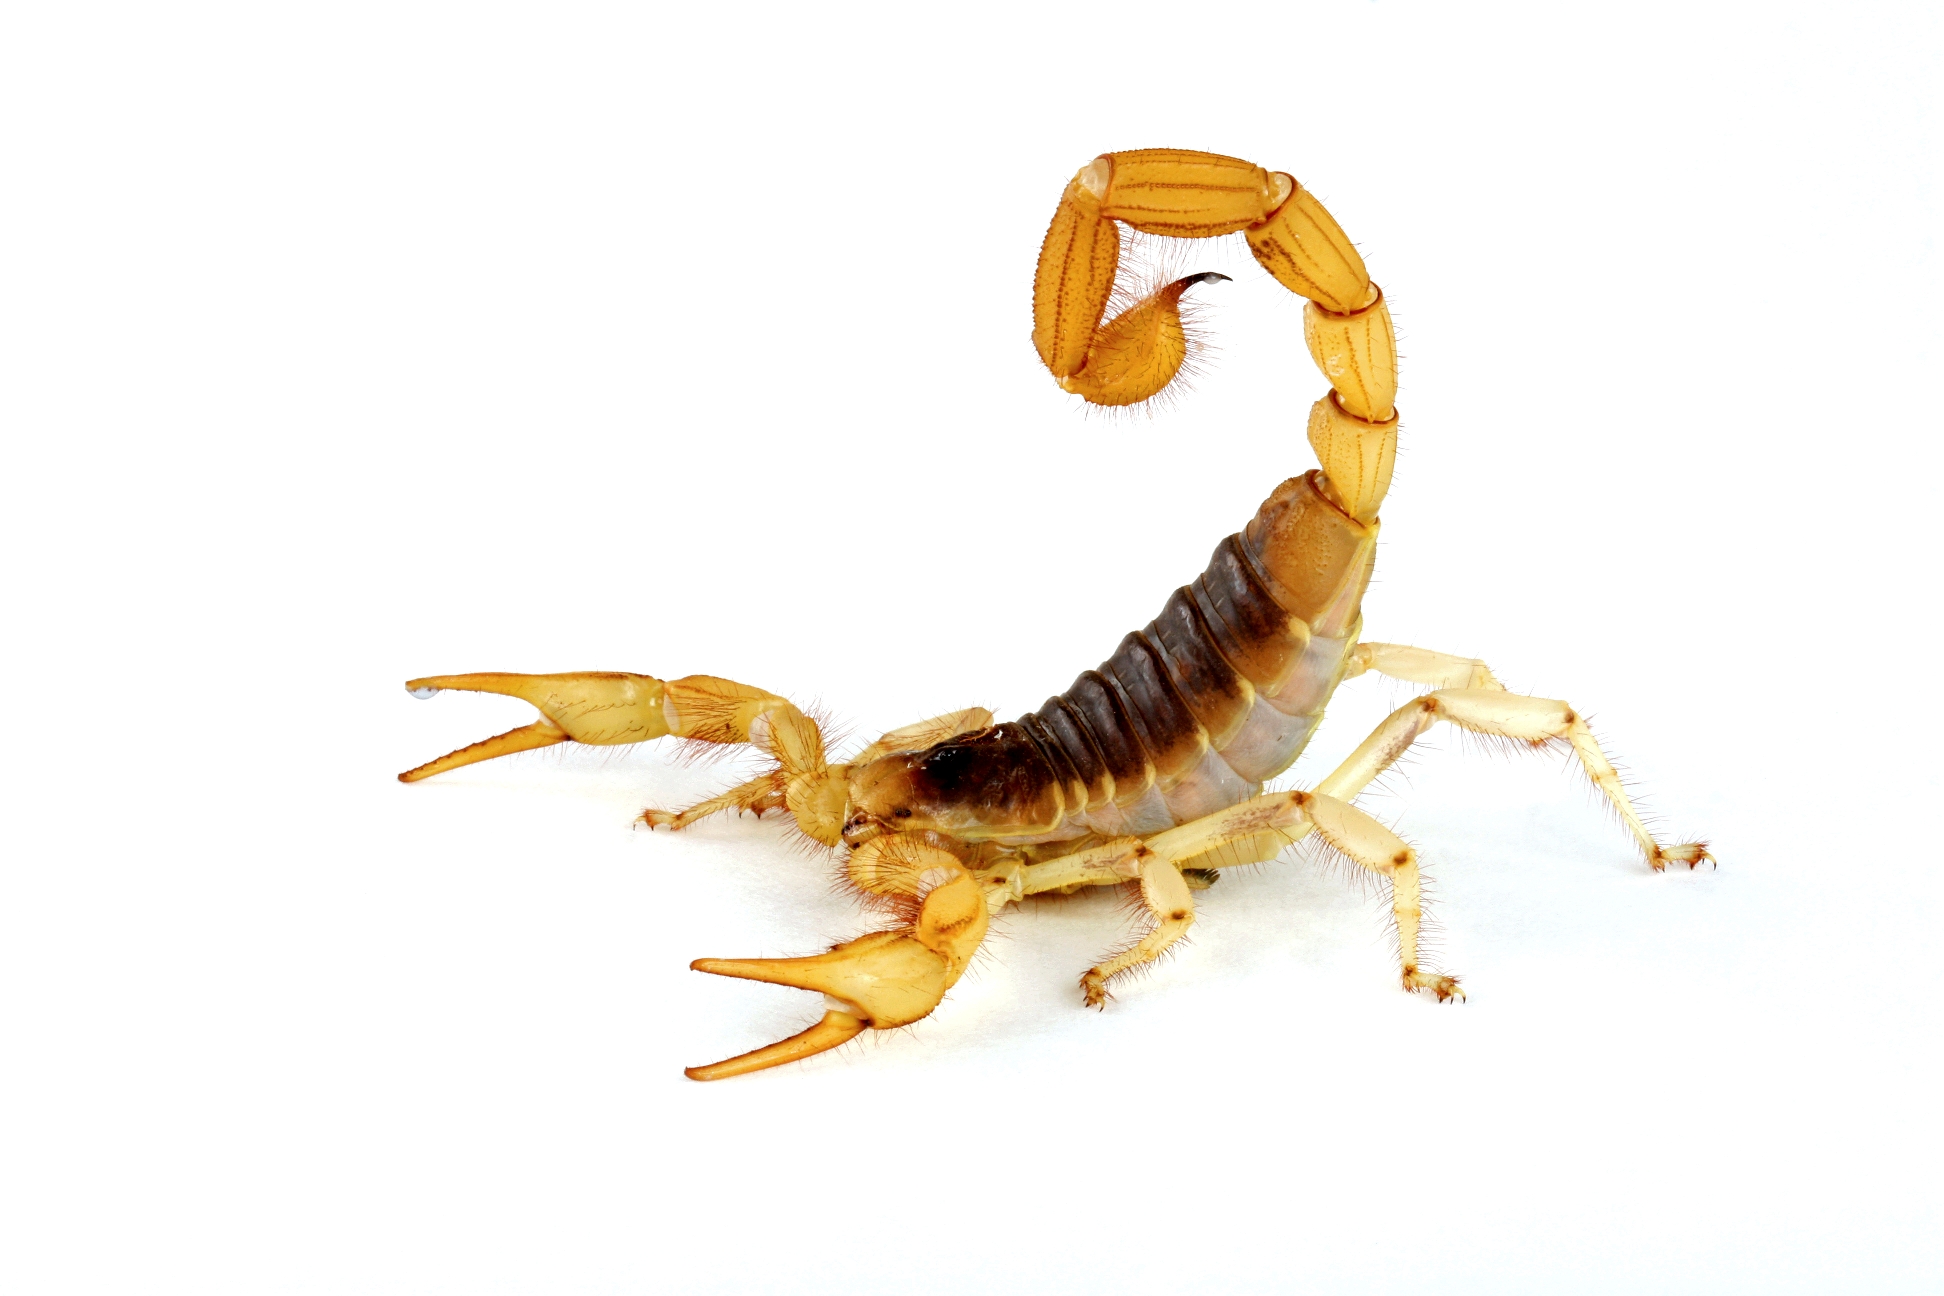 An AZ Monsoon Staple: the Scorpion – AZ Dept. of Health Services ...